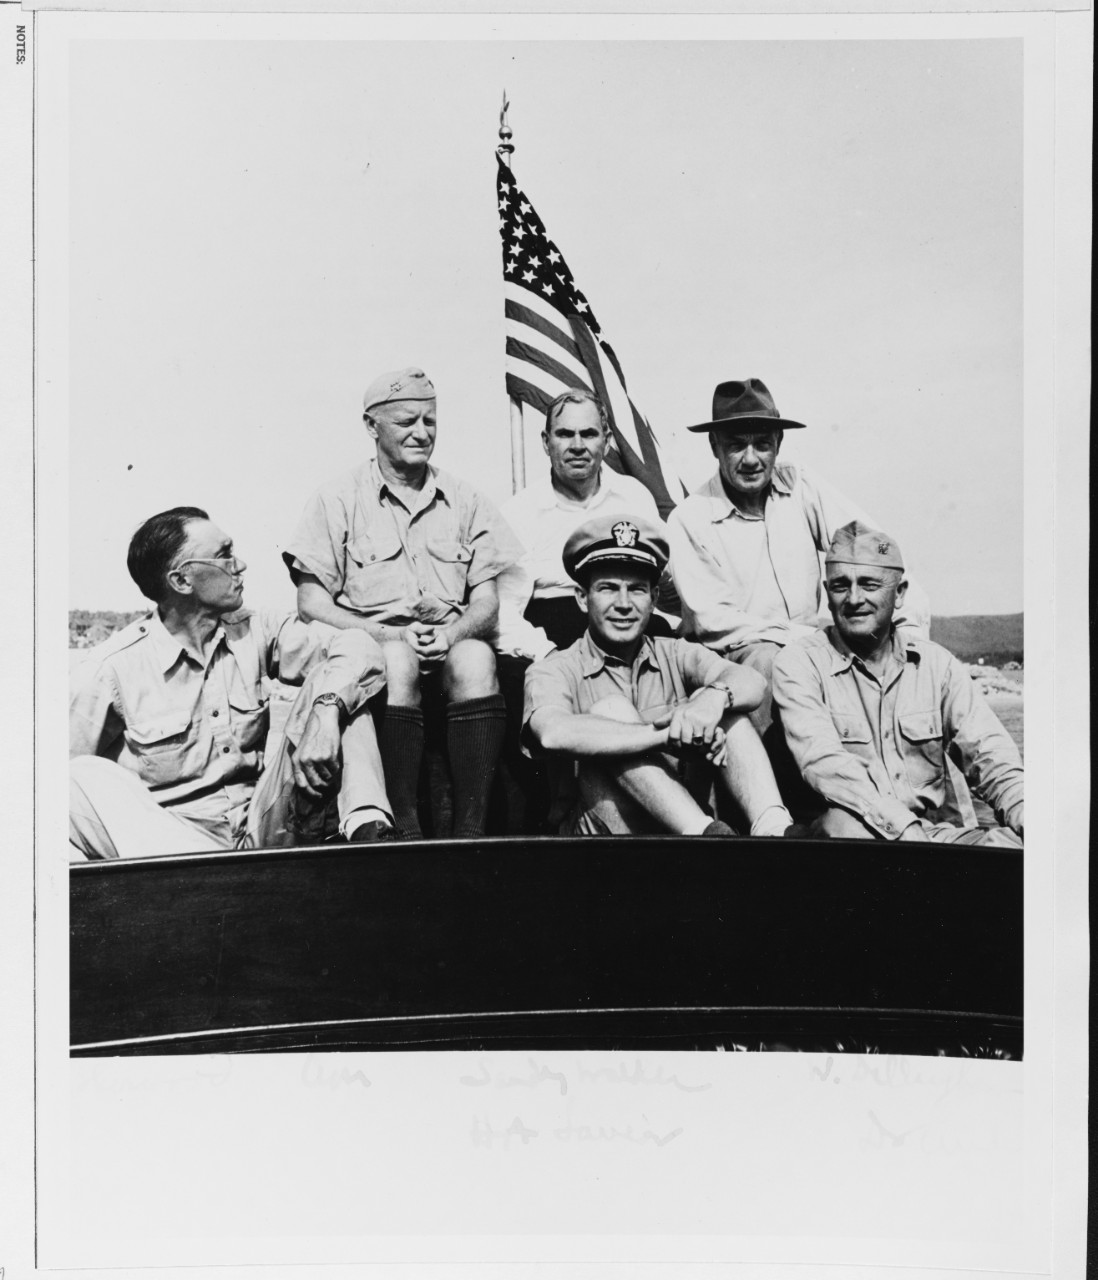 Fleet Admiral C.W. Nimitz with Friends